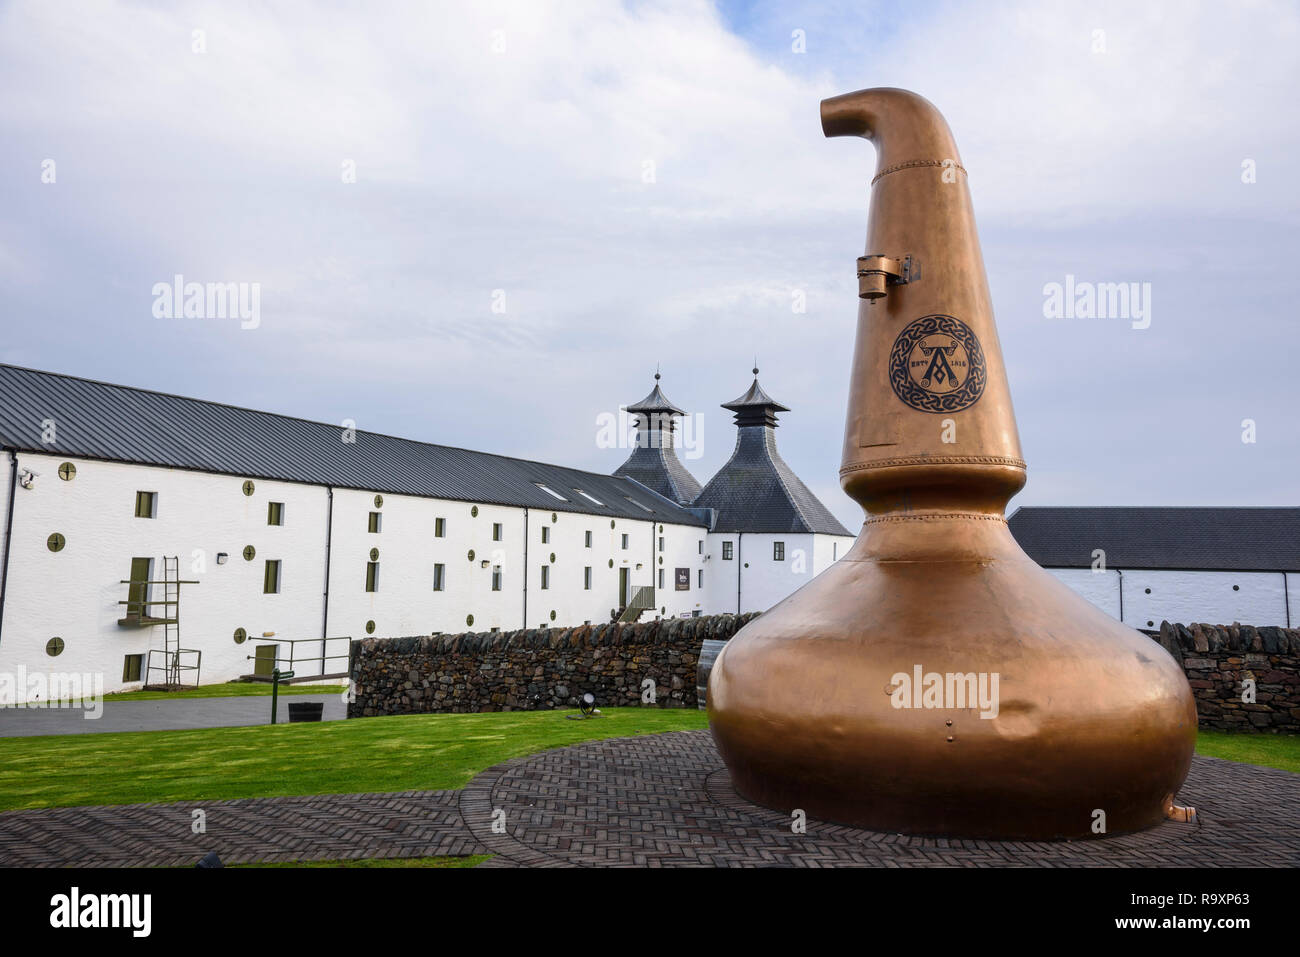 Ardbeg Distillery, Islay, Ebridi Interne, Argyll & Bute, Scozia Foto Stock